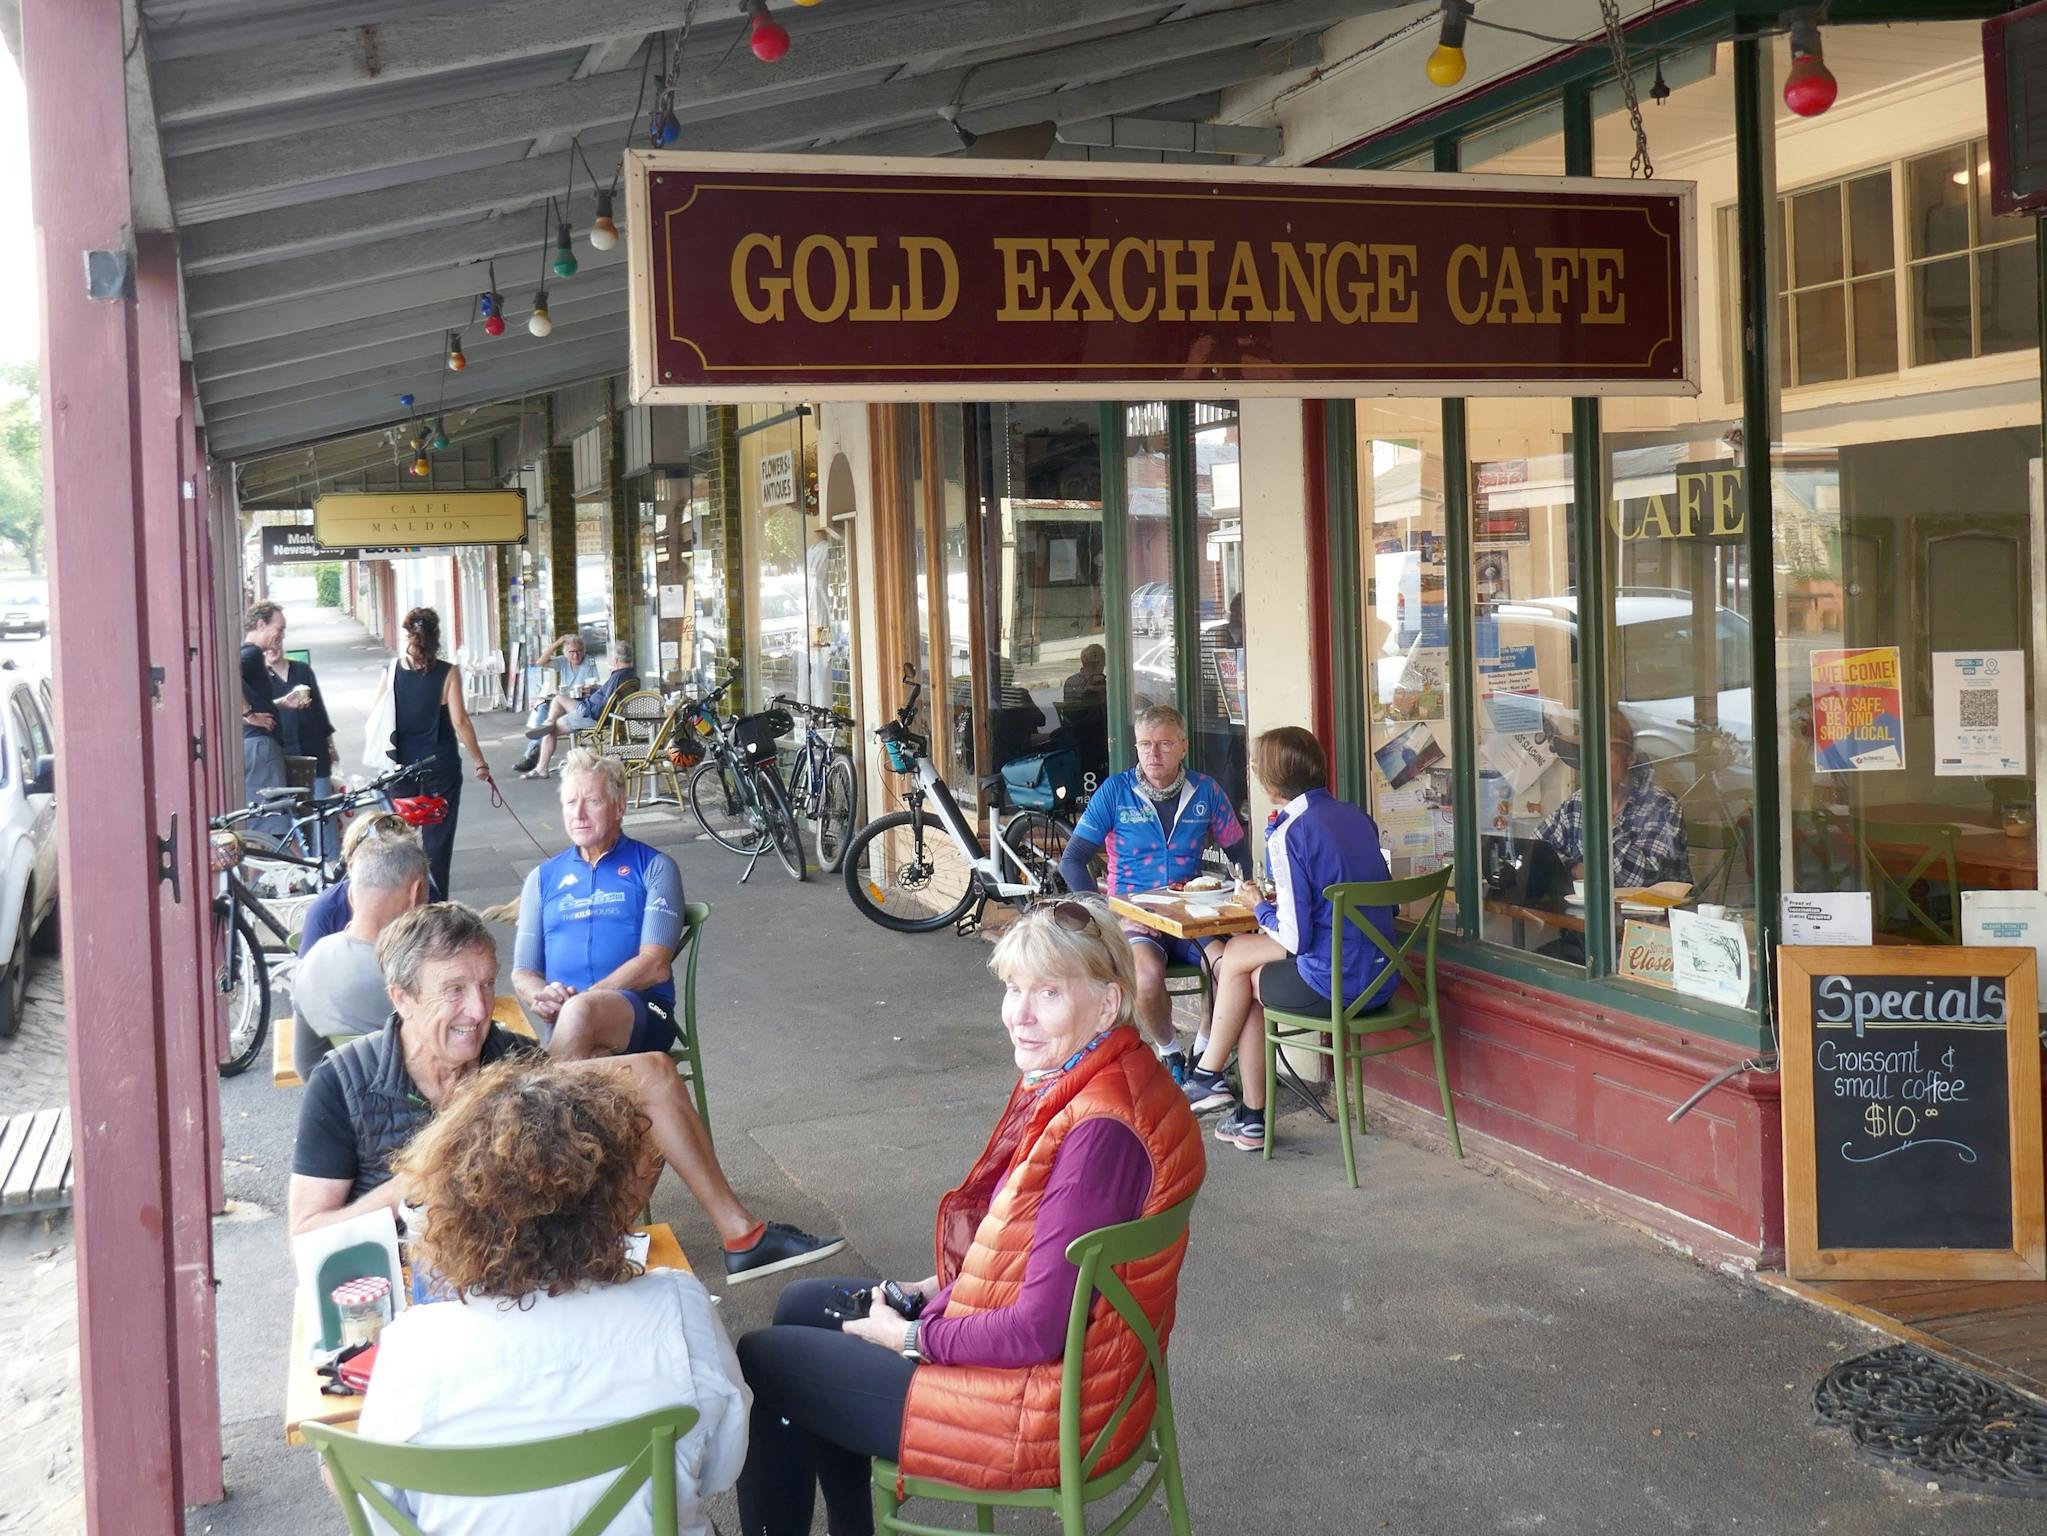 Cafe breakfast in historic Maldon